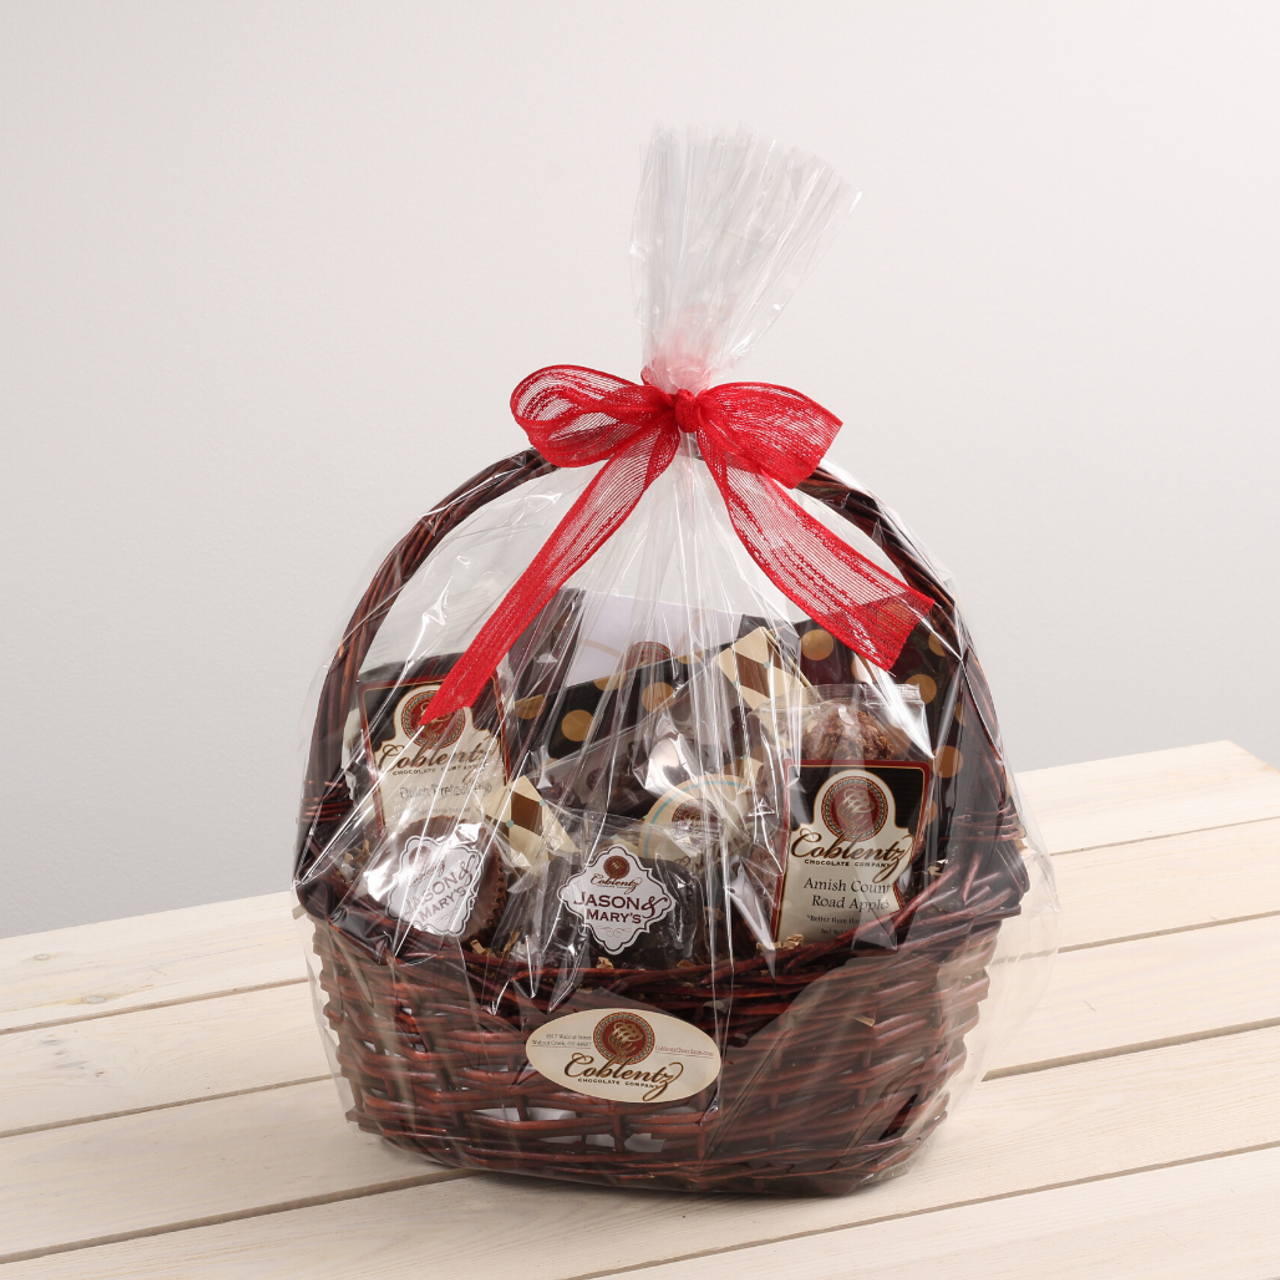 Cookies, Chocolates and More Premium Chocolate Gift Basket - Walmart.com